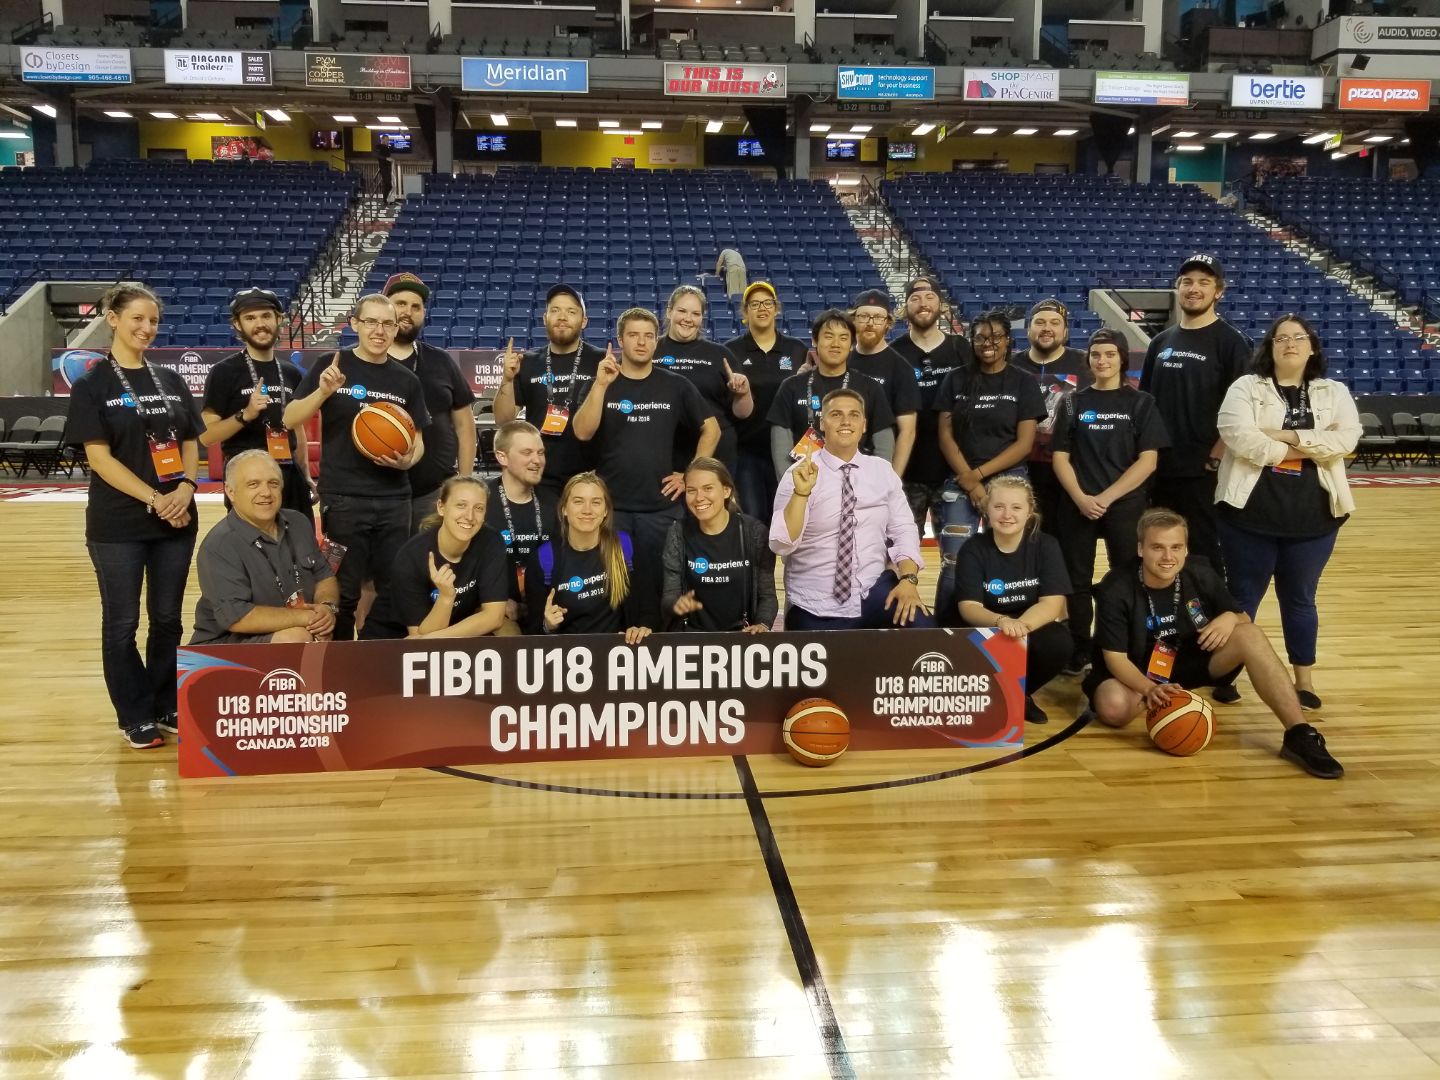 Niagara College Broadcasting students showcased by FIBA